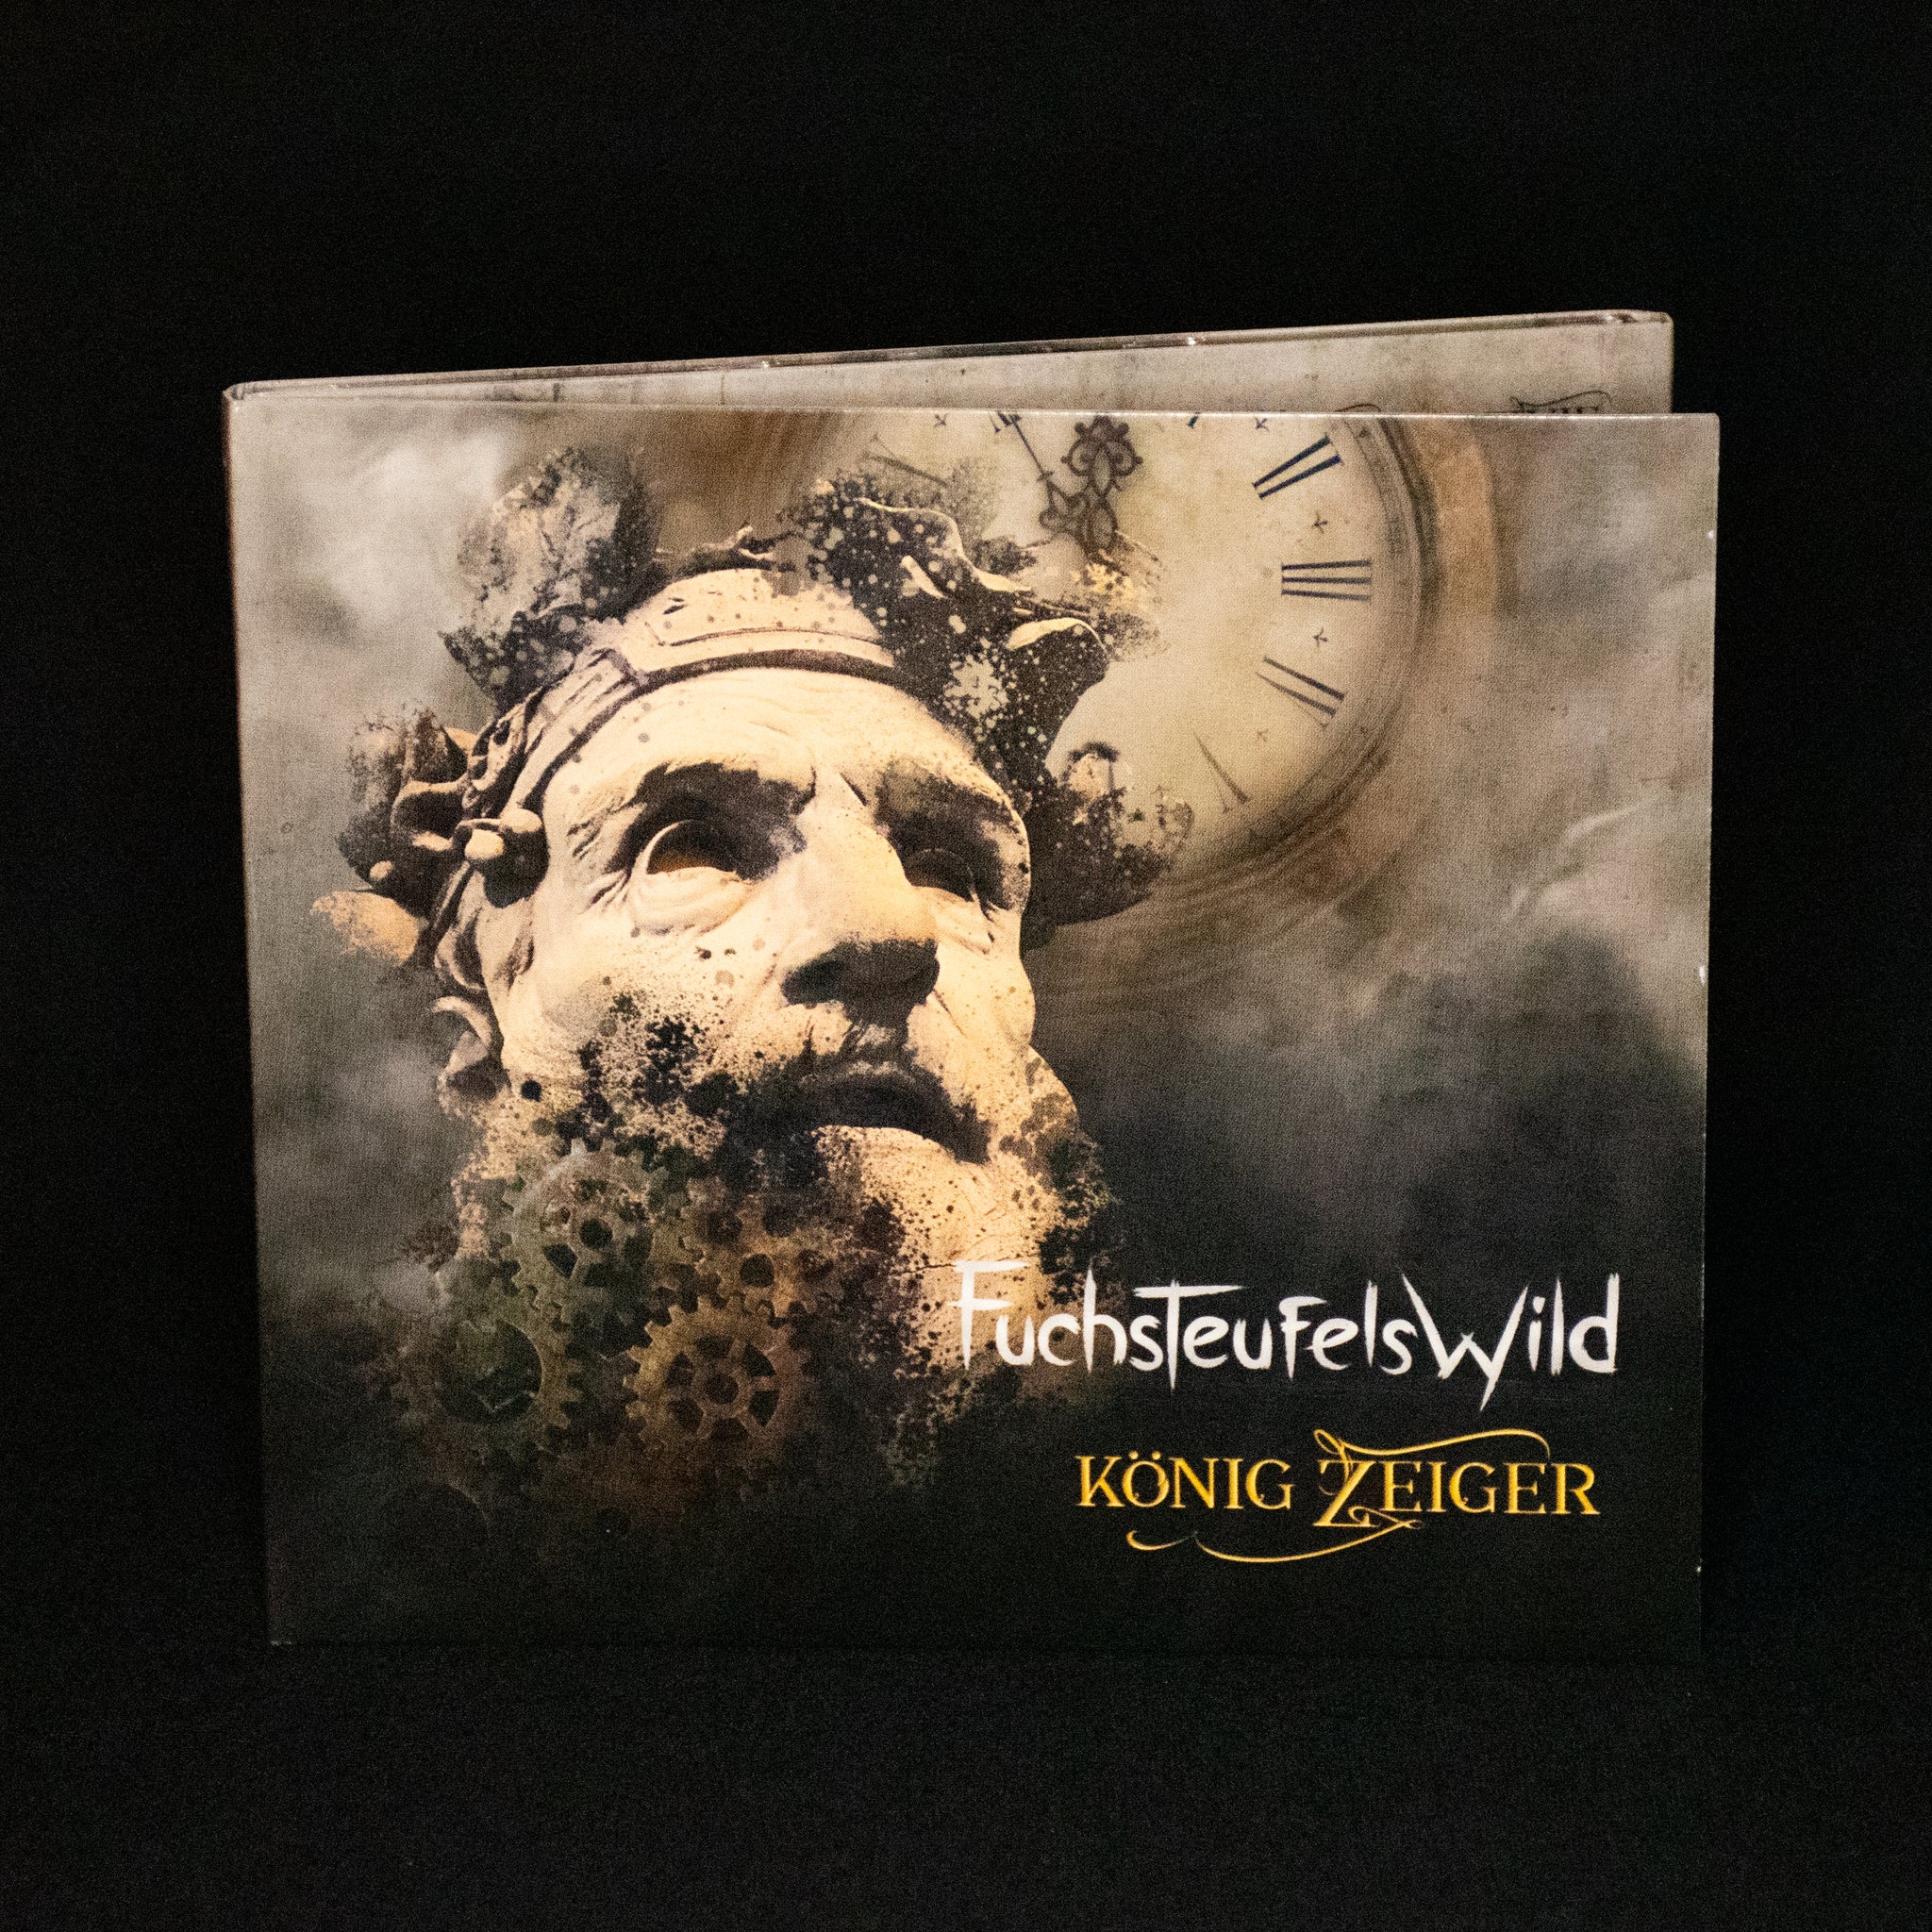 Fuchsteufelswild - König Zeiger LP CD